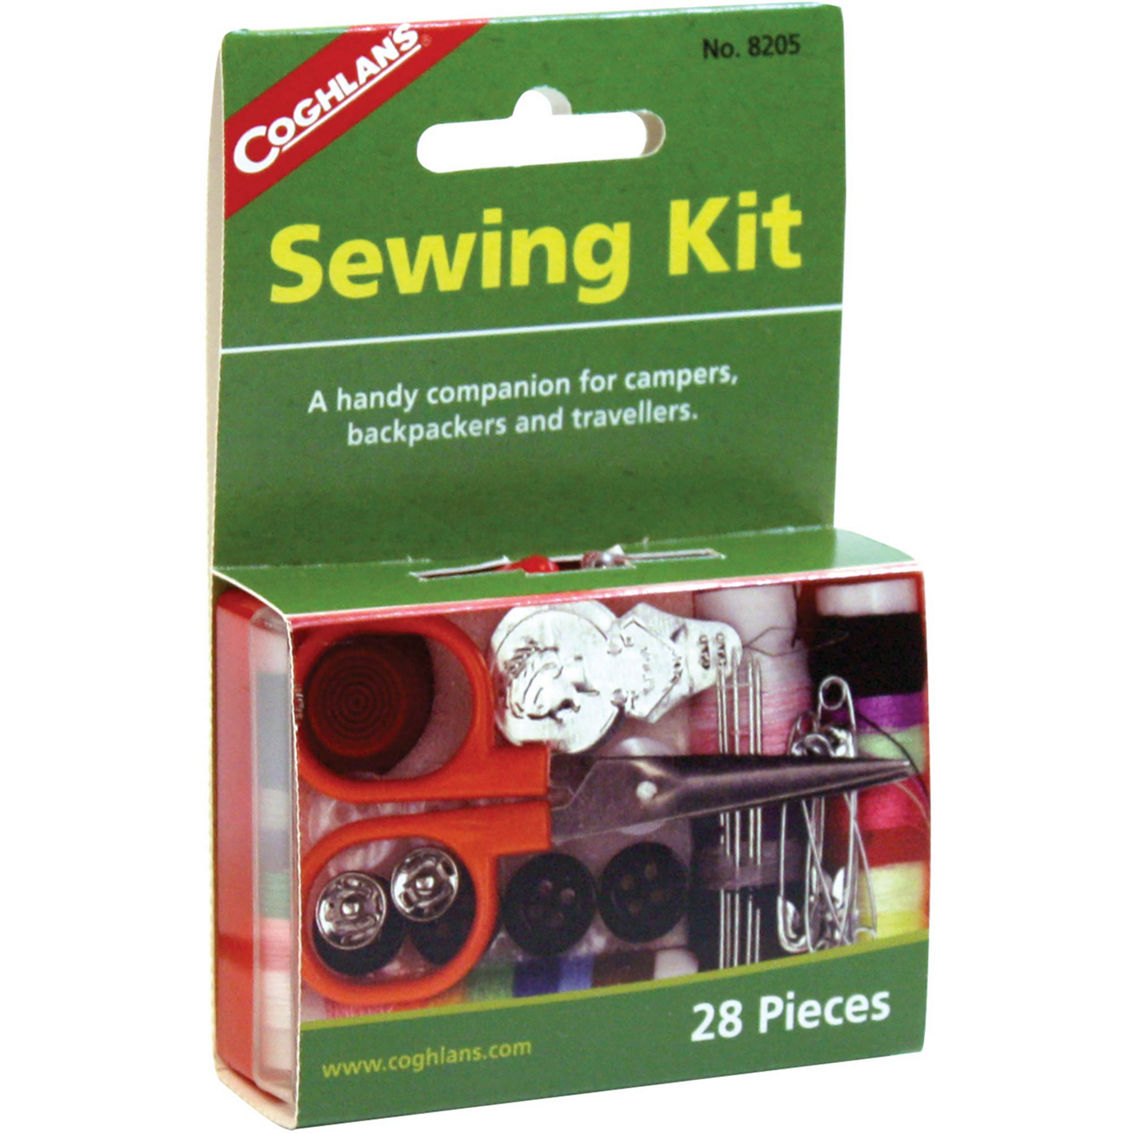 Coghlans 28 pc. Sewing Kit - Image 2 of 3